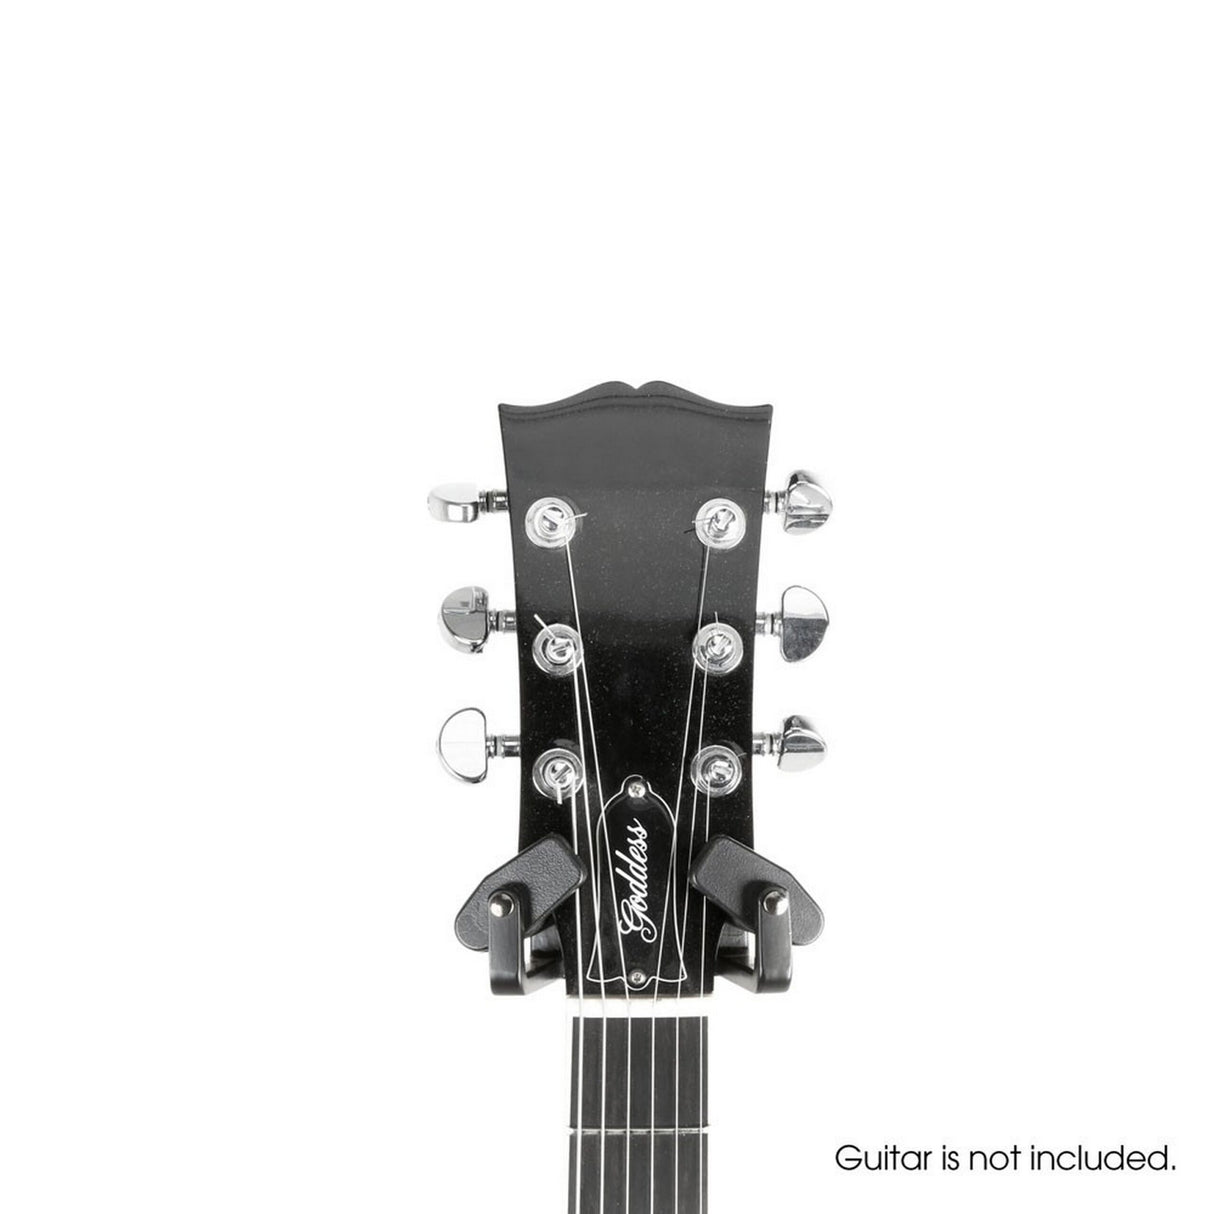 Gravity GS 01 WMB Wall-Mount Guitar Hanger with Neck Hug